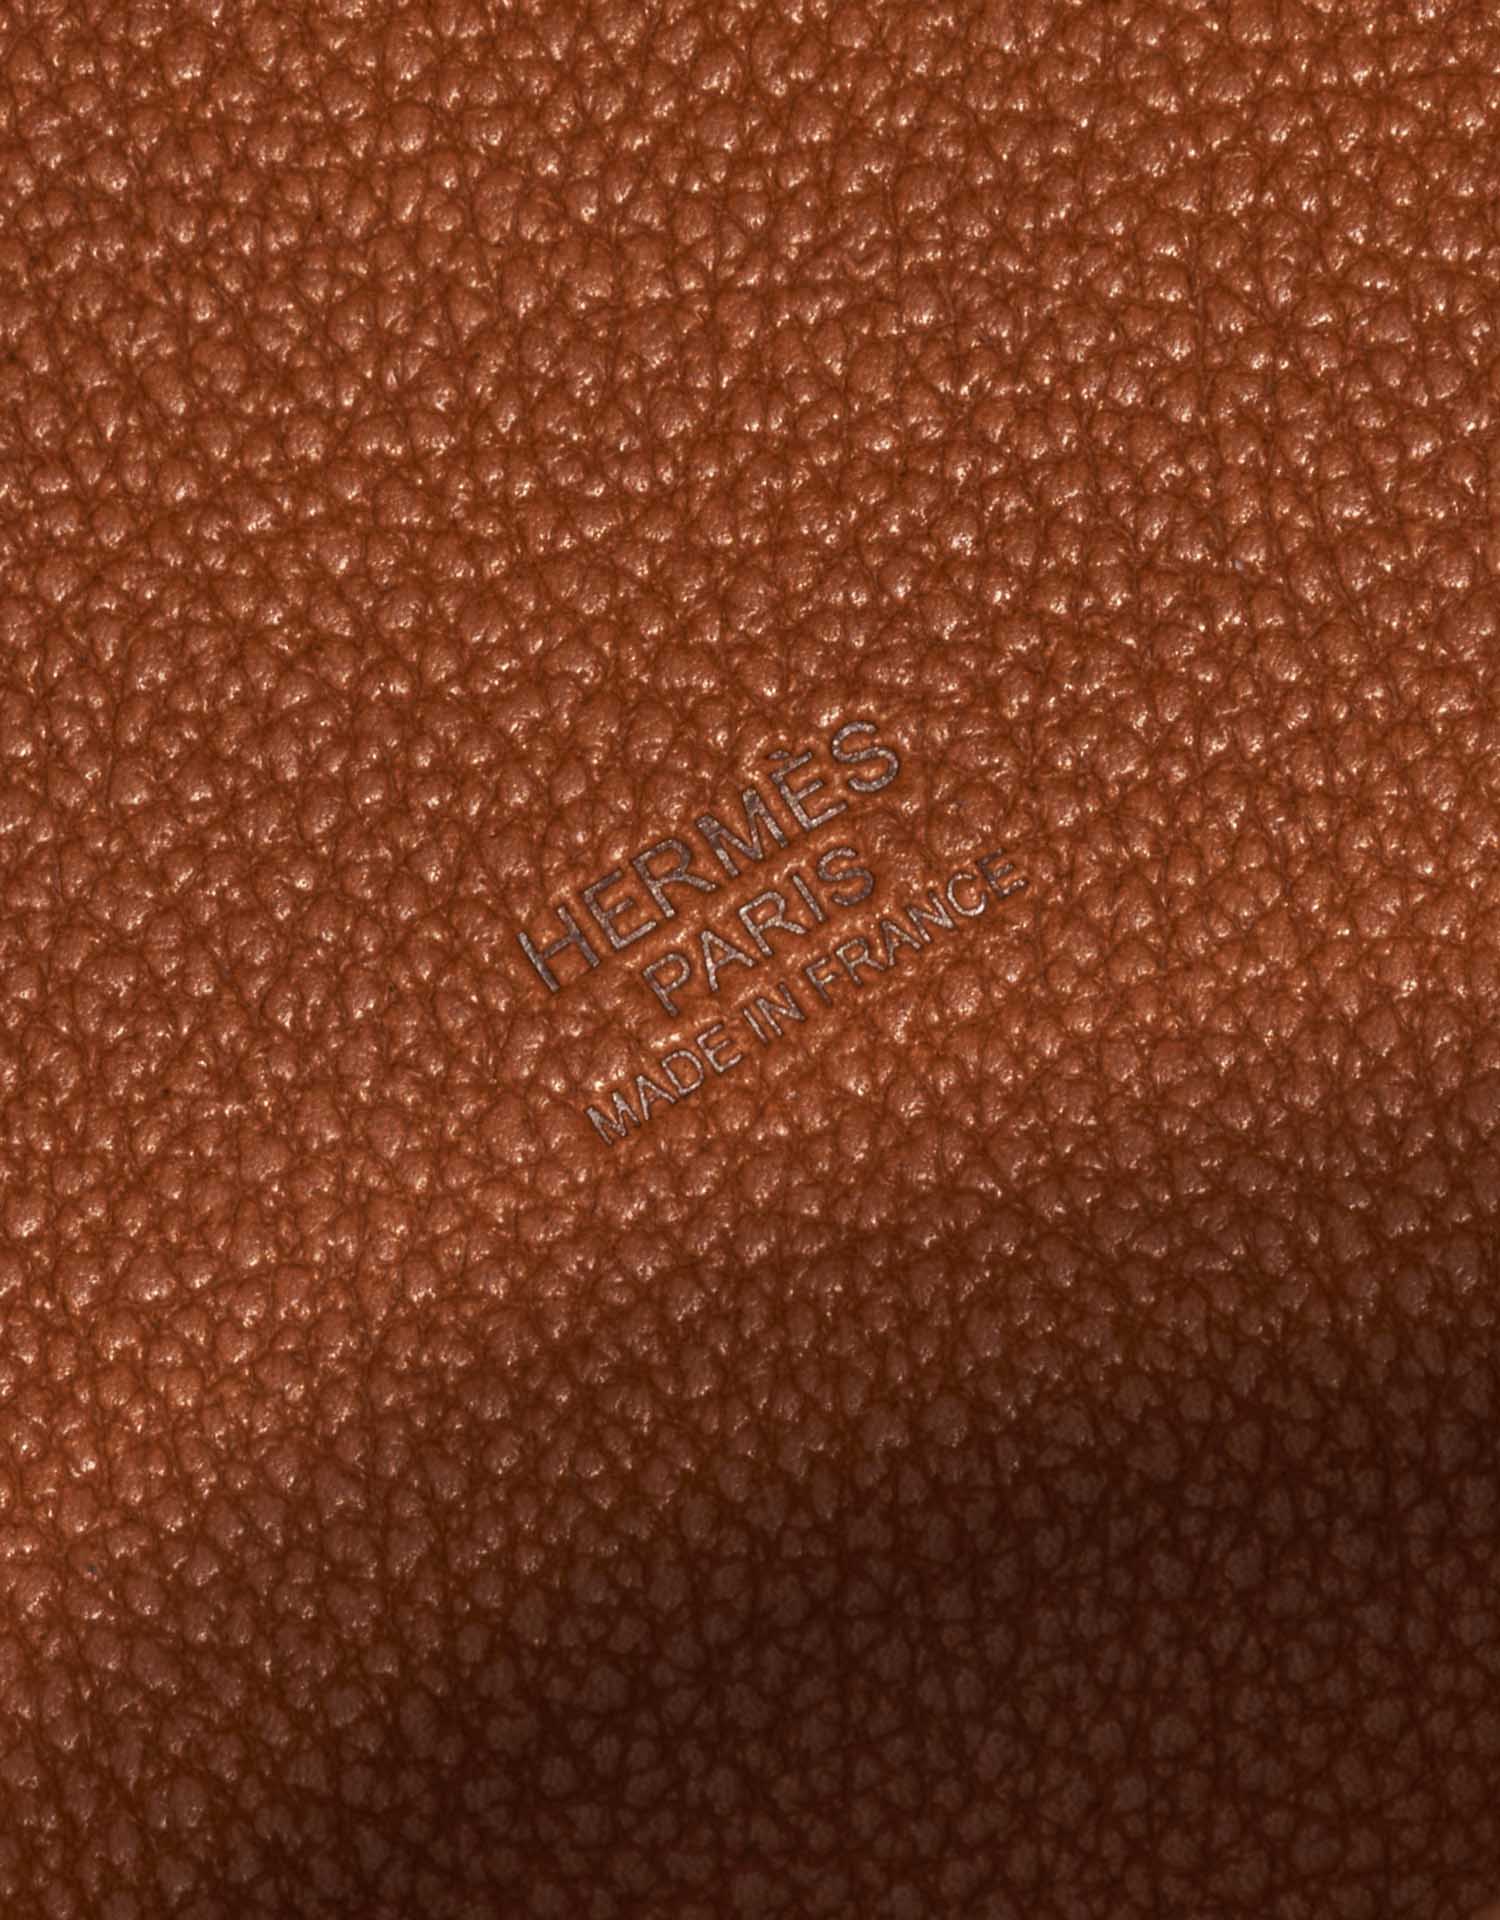 Hermes Picotin Lock bag PM Fauve Barenia faubourg leather Gold